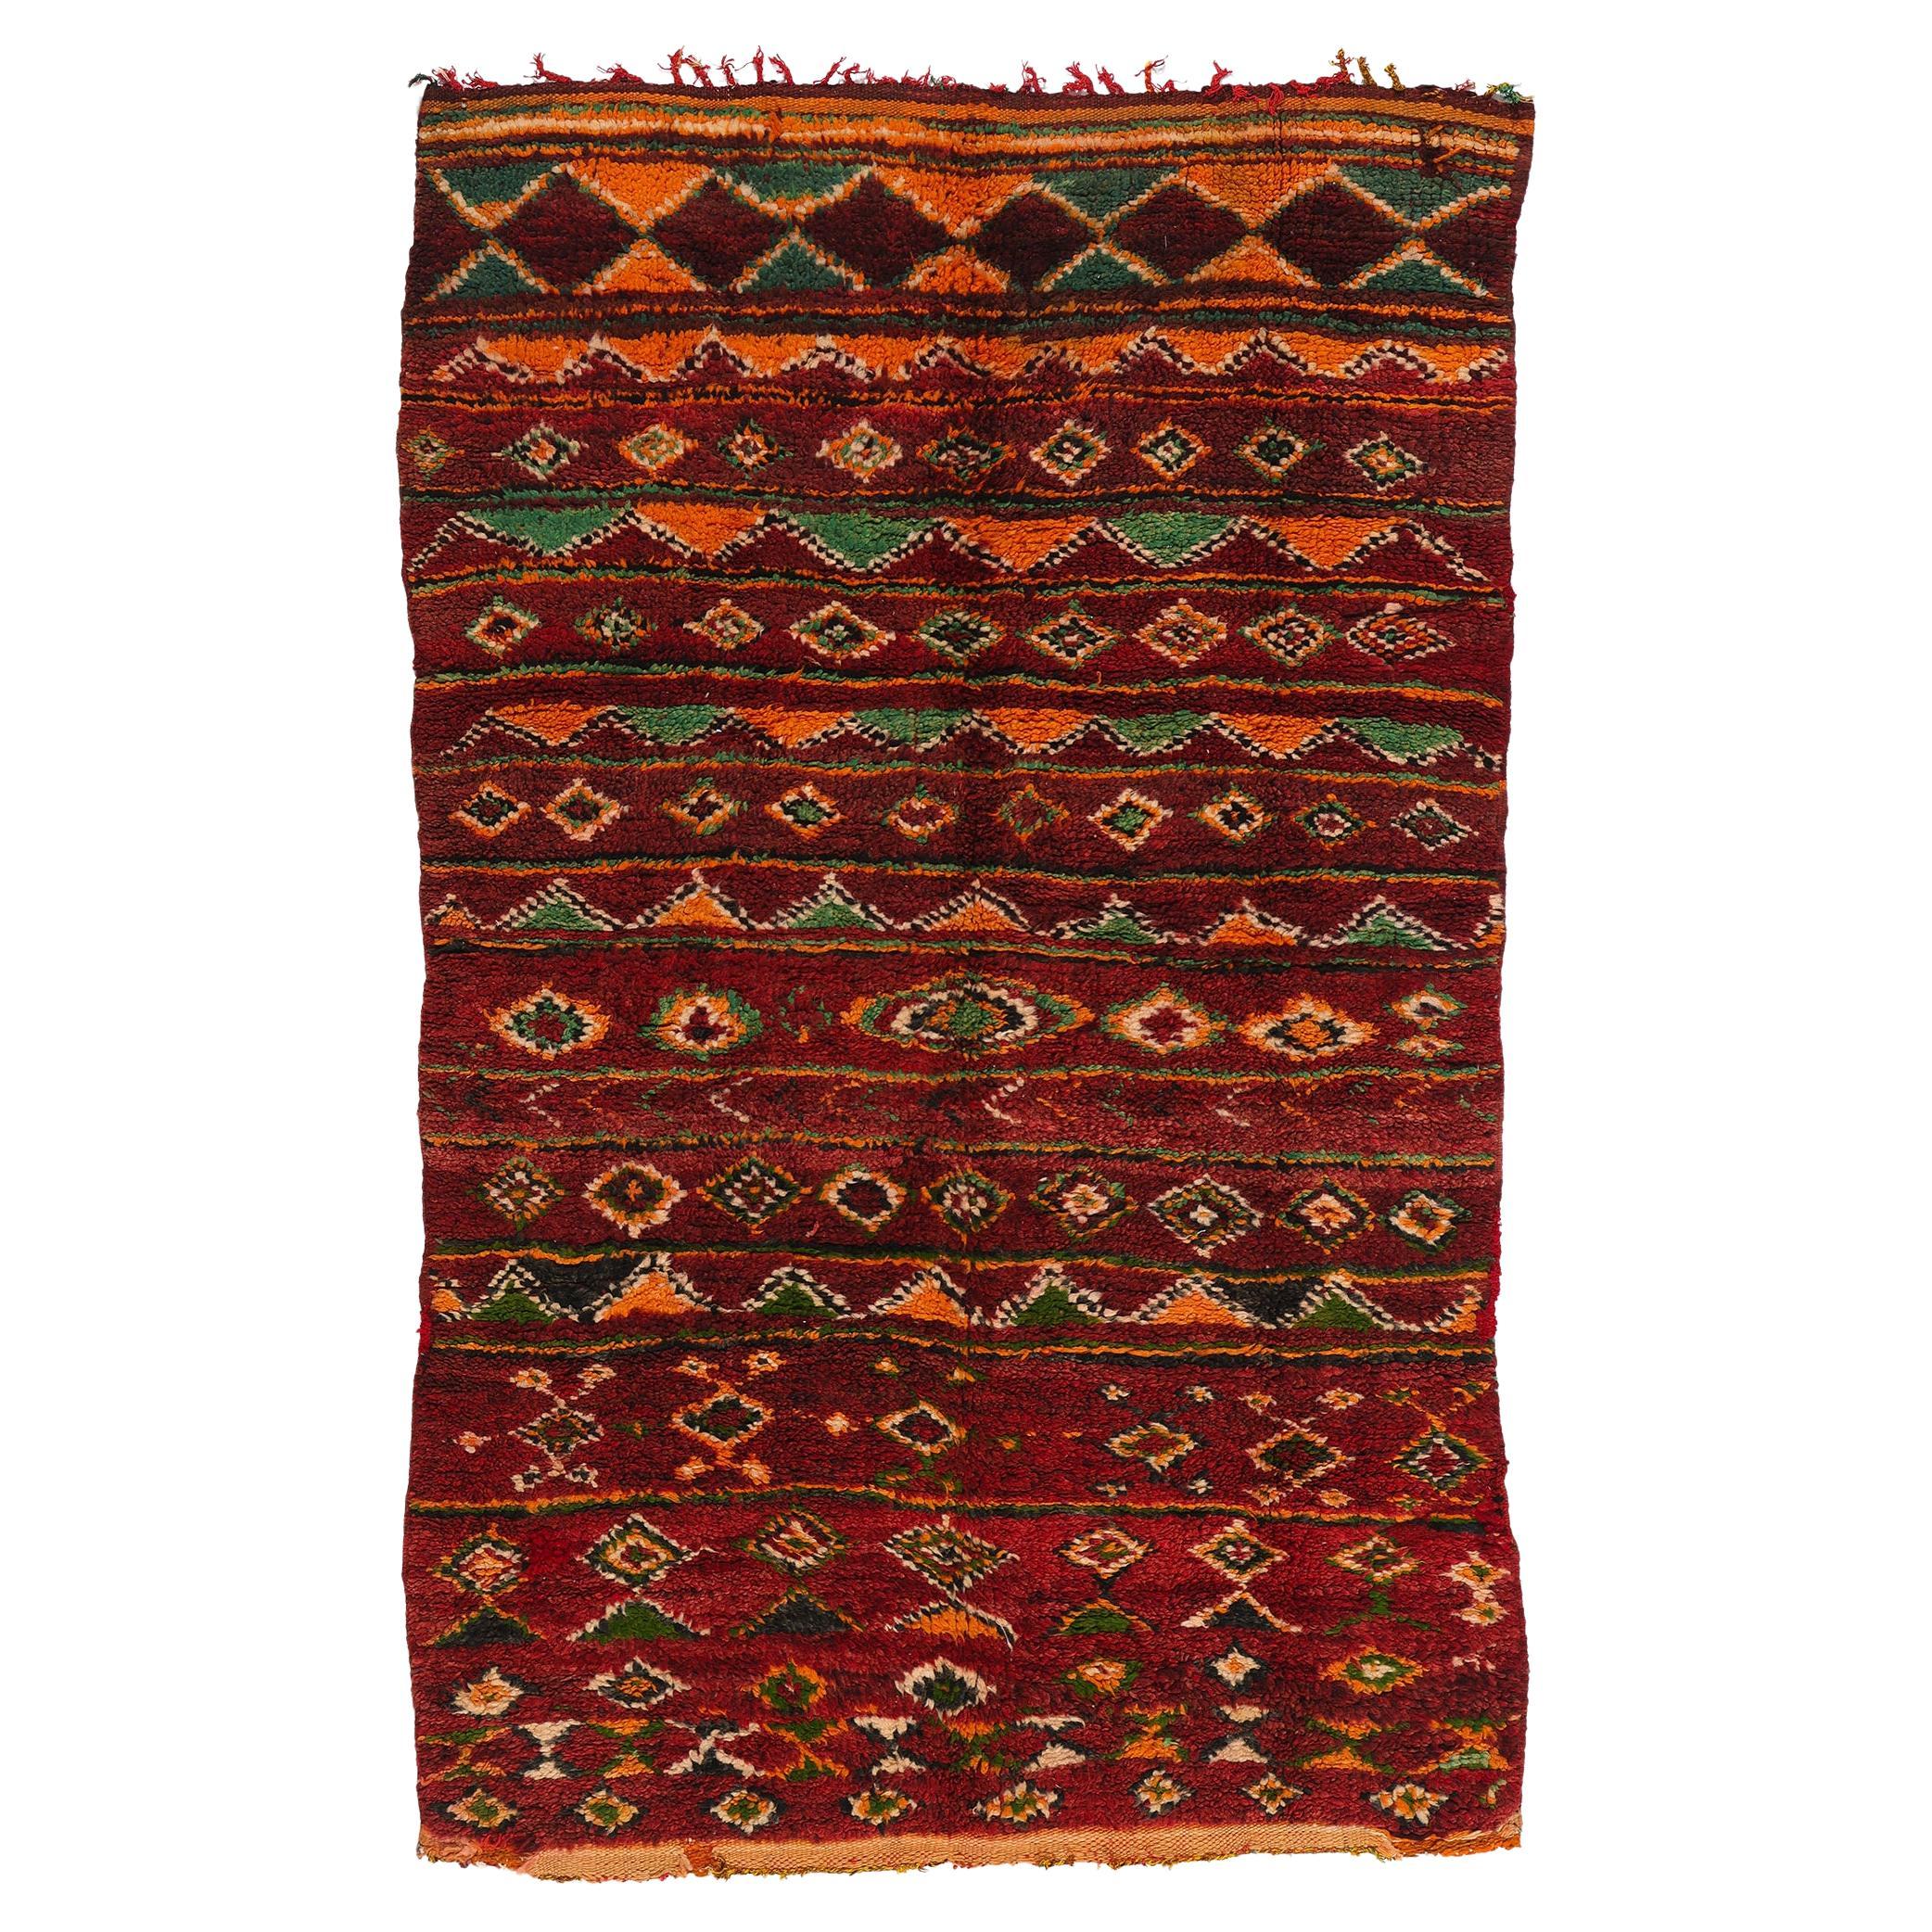 Boujad Marokkanischer Vintage-Teppich, Cozy Nomad Meets Southwest Bohemian, Boujad